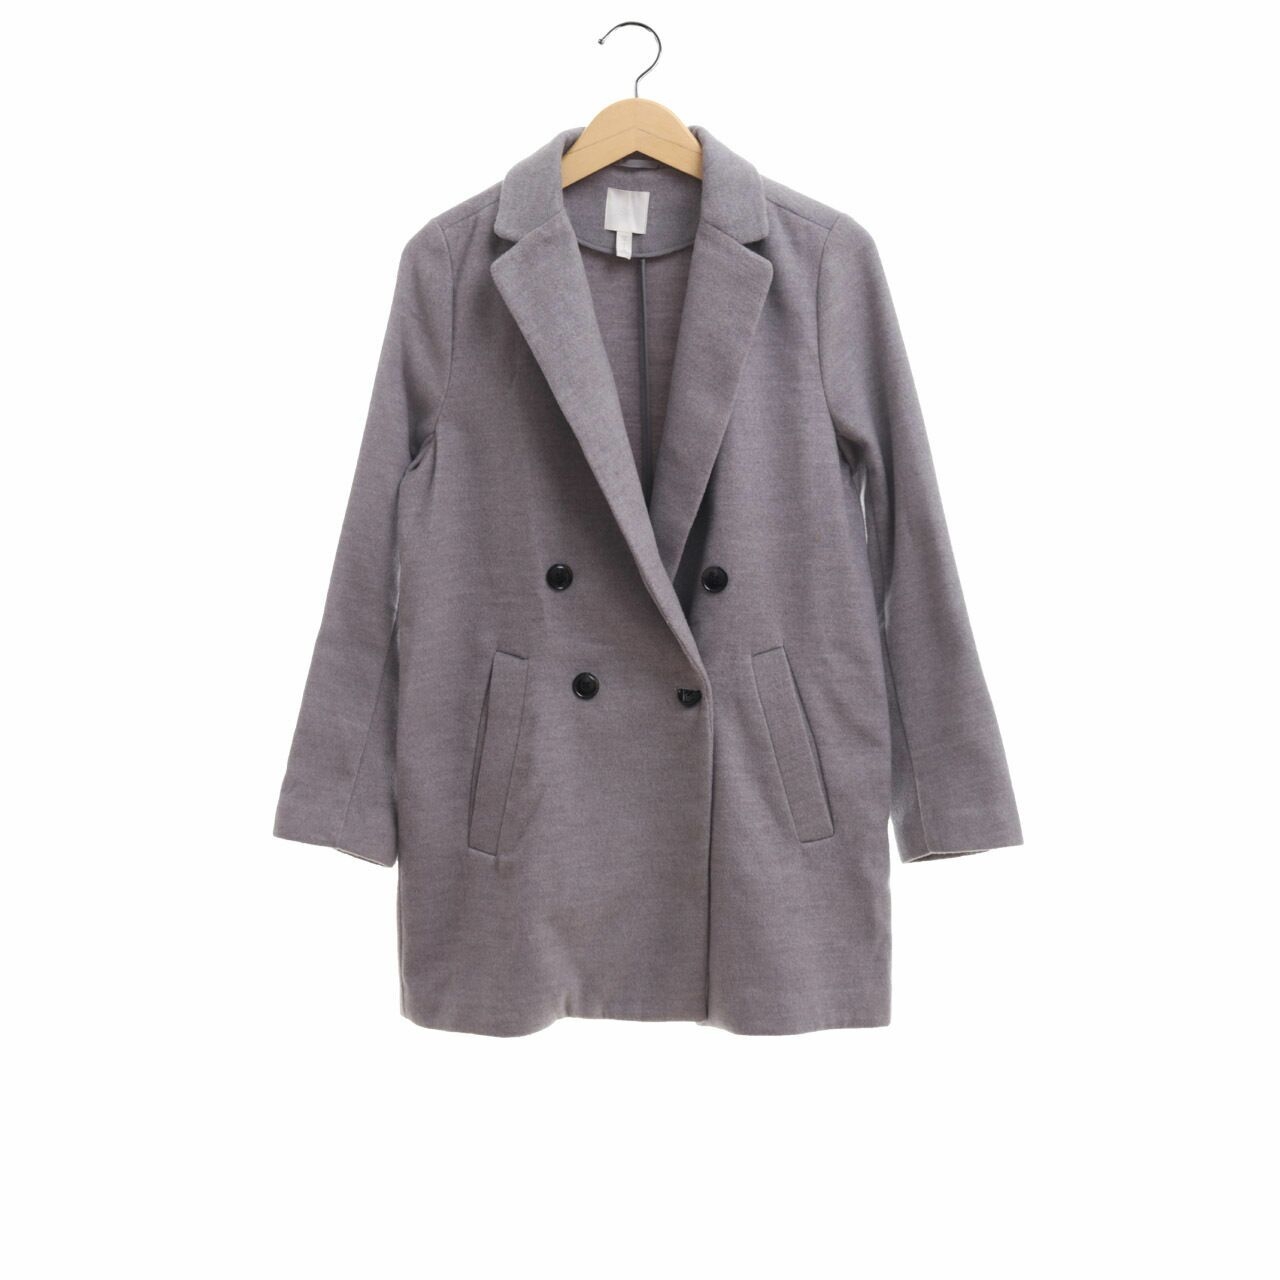 H&M Grey Coat